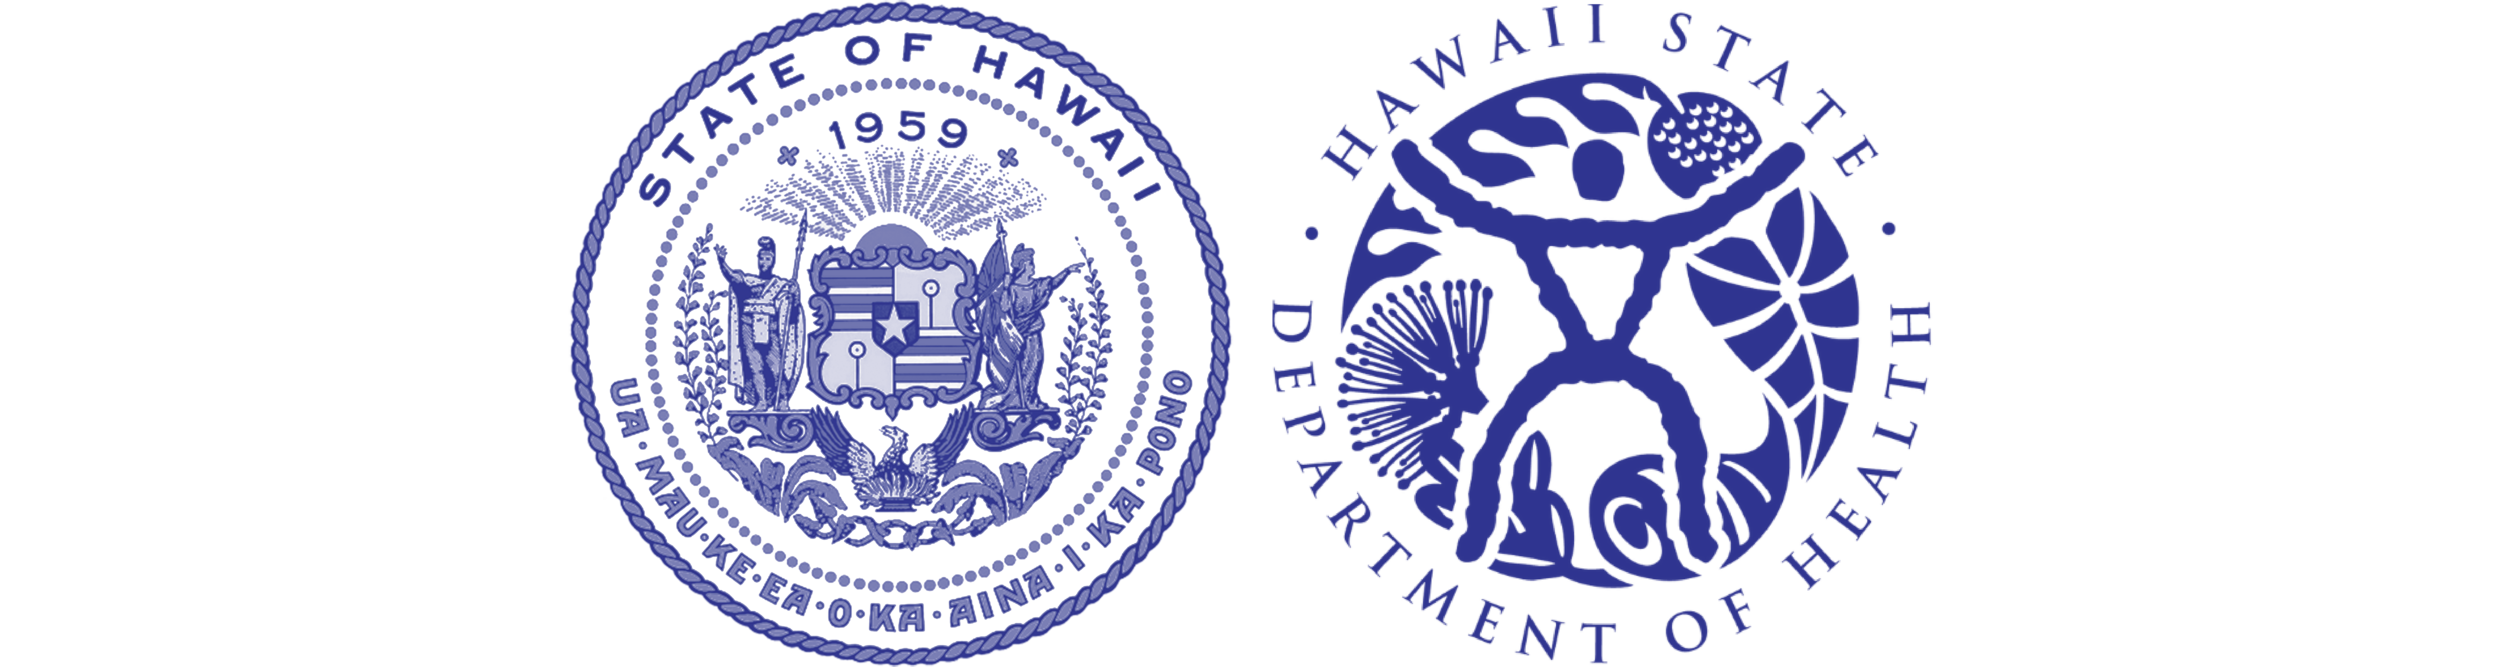 HPHA-waiwai-logo-State-Hawaii-DOH.png